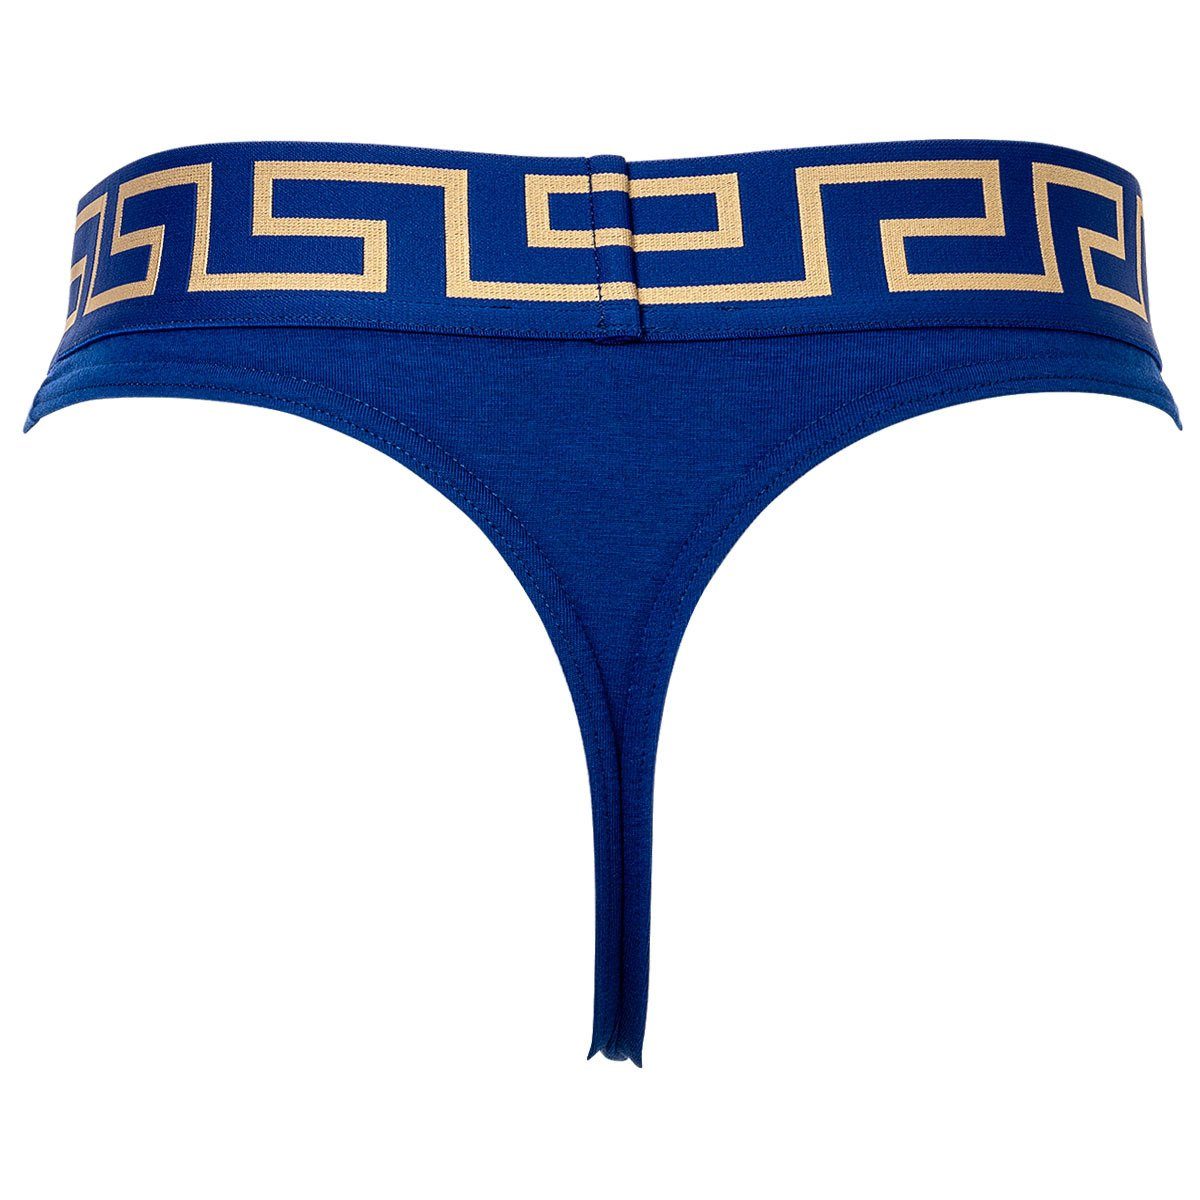 Versace Blau/Gold - Stretch Cotton String, Thong, Tanga Slip, Tanga Herren